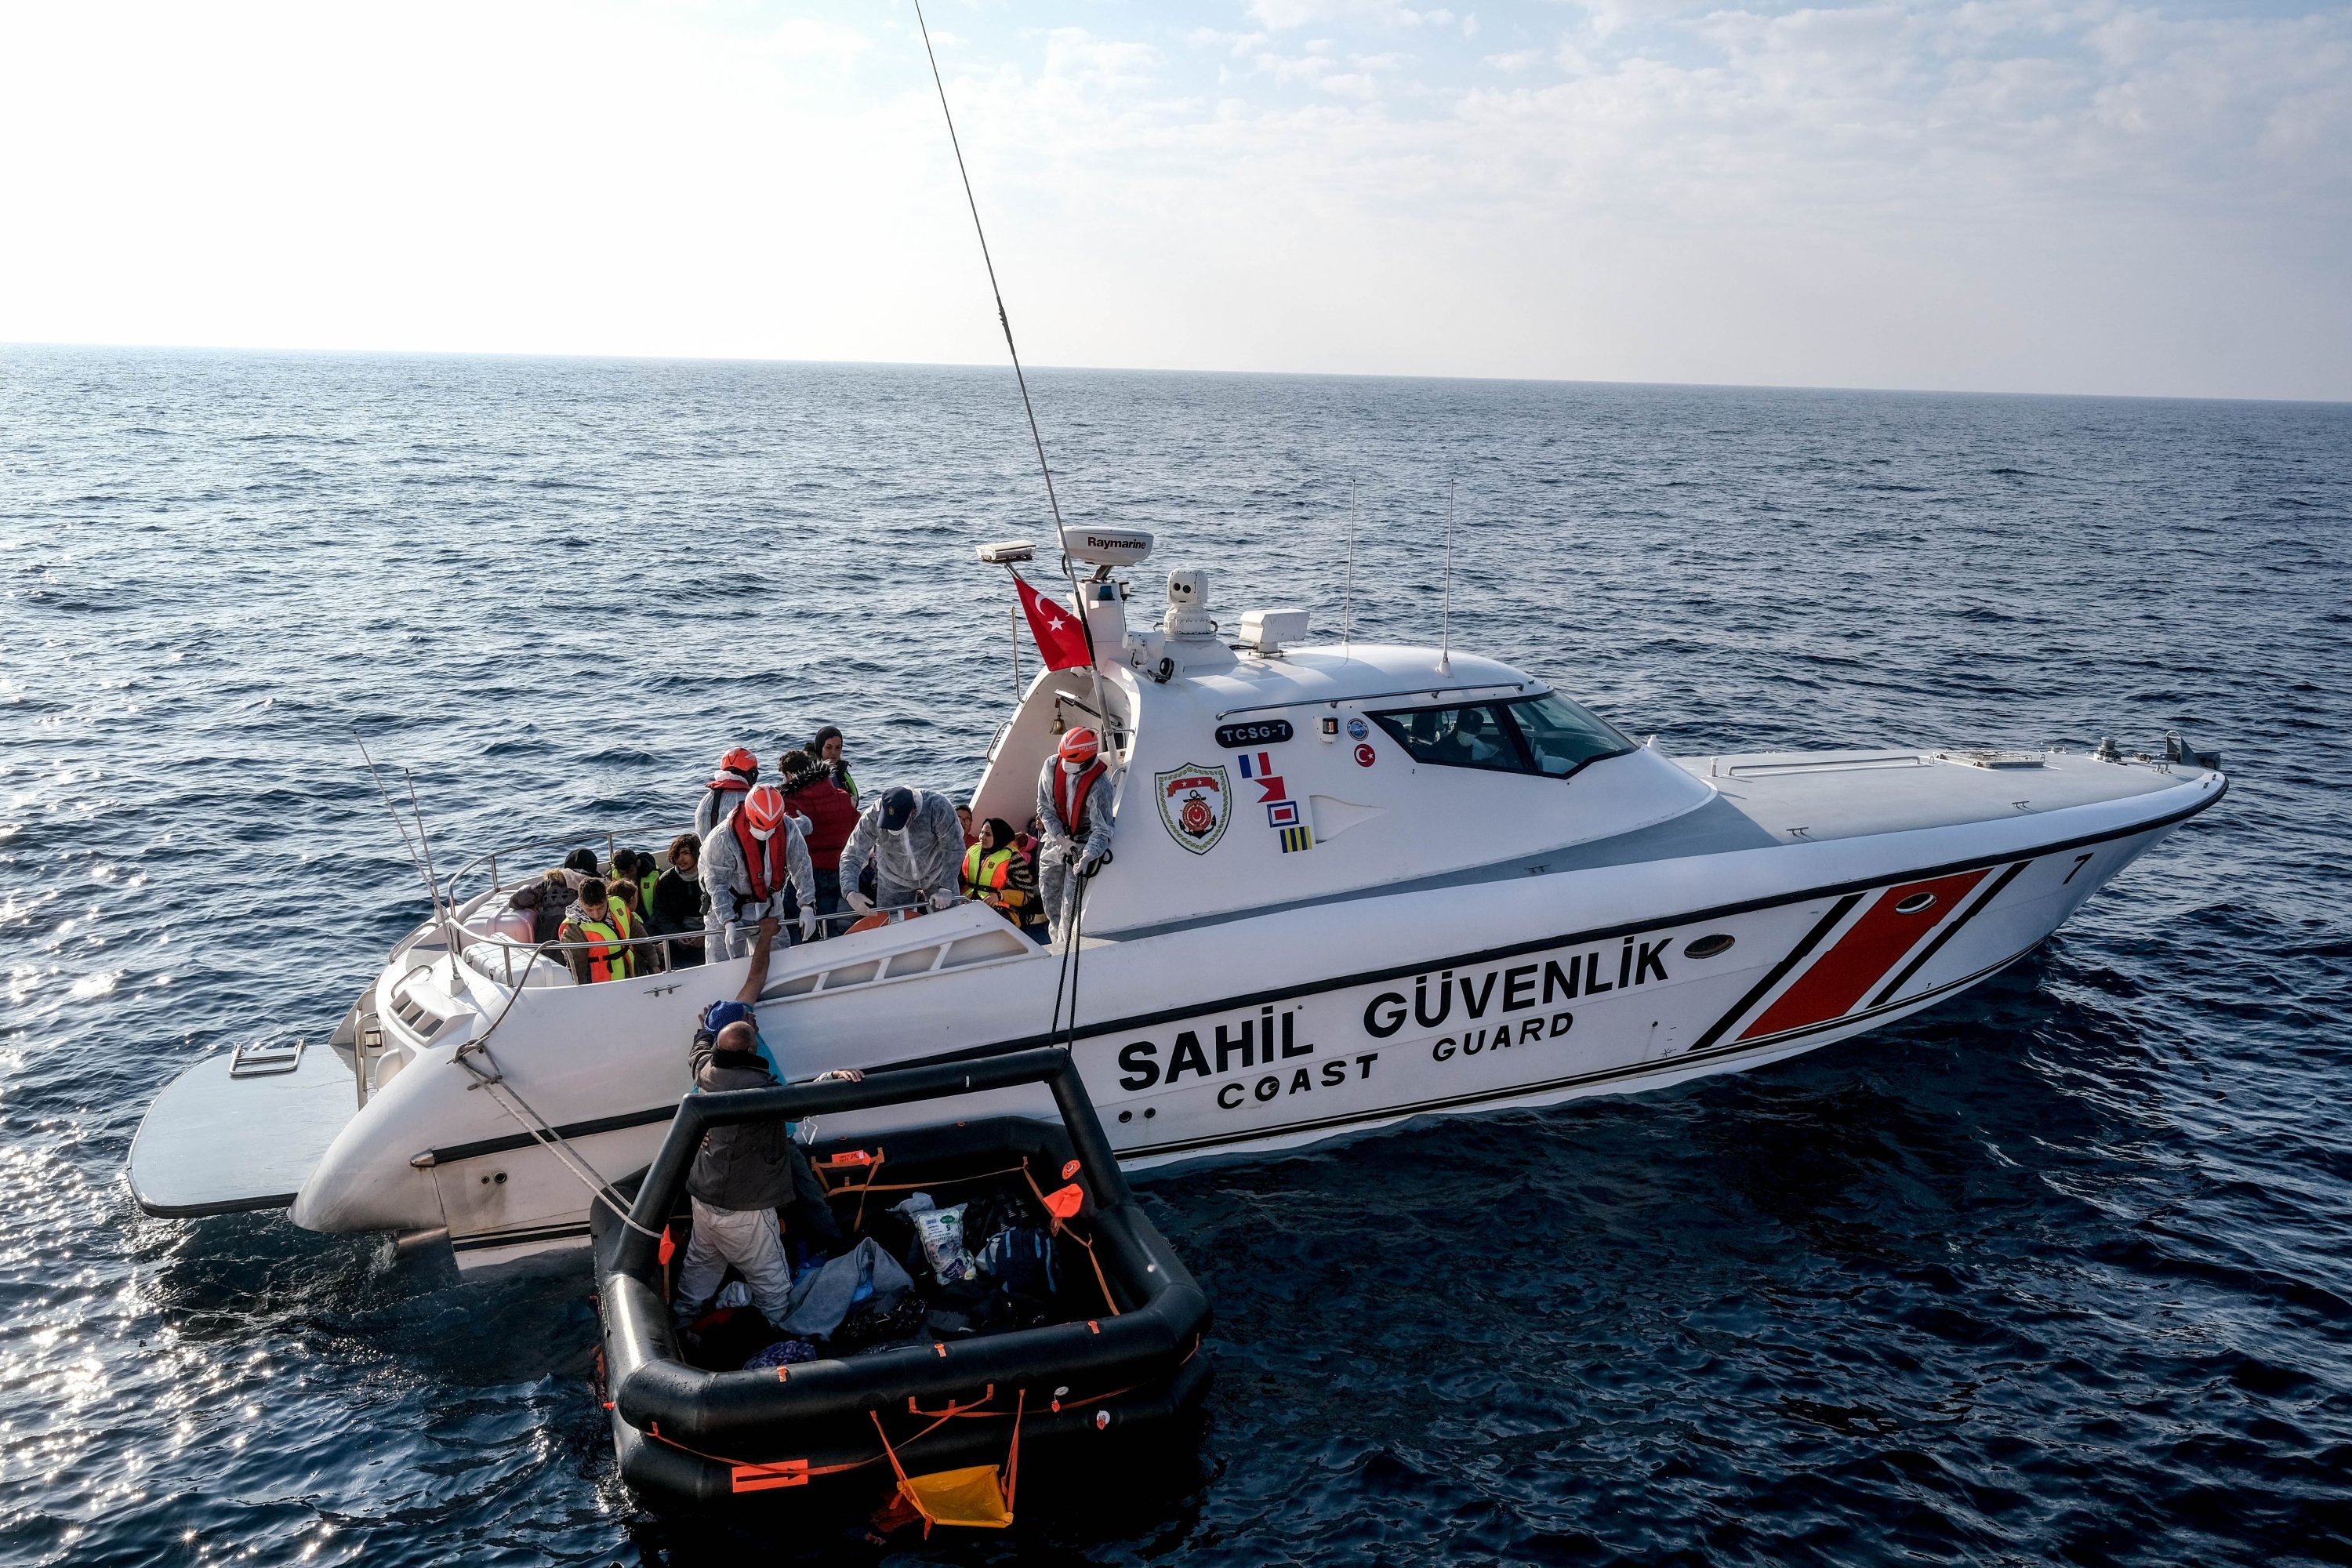 Turkish coast guard units rescue migrants in the Aegean Sea, Turkey, Nov. 3, 2021. (Photo by Uğur Yıldırım)